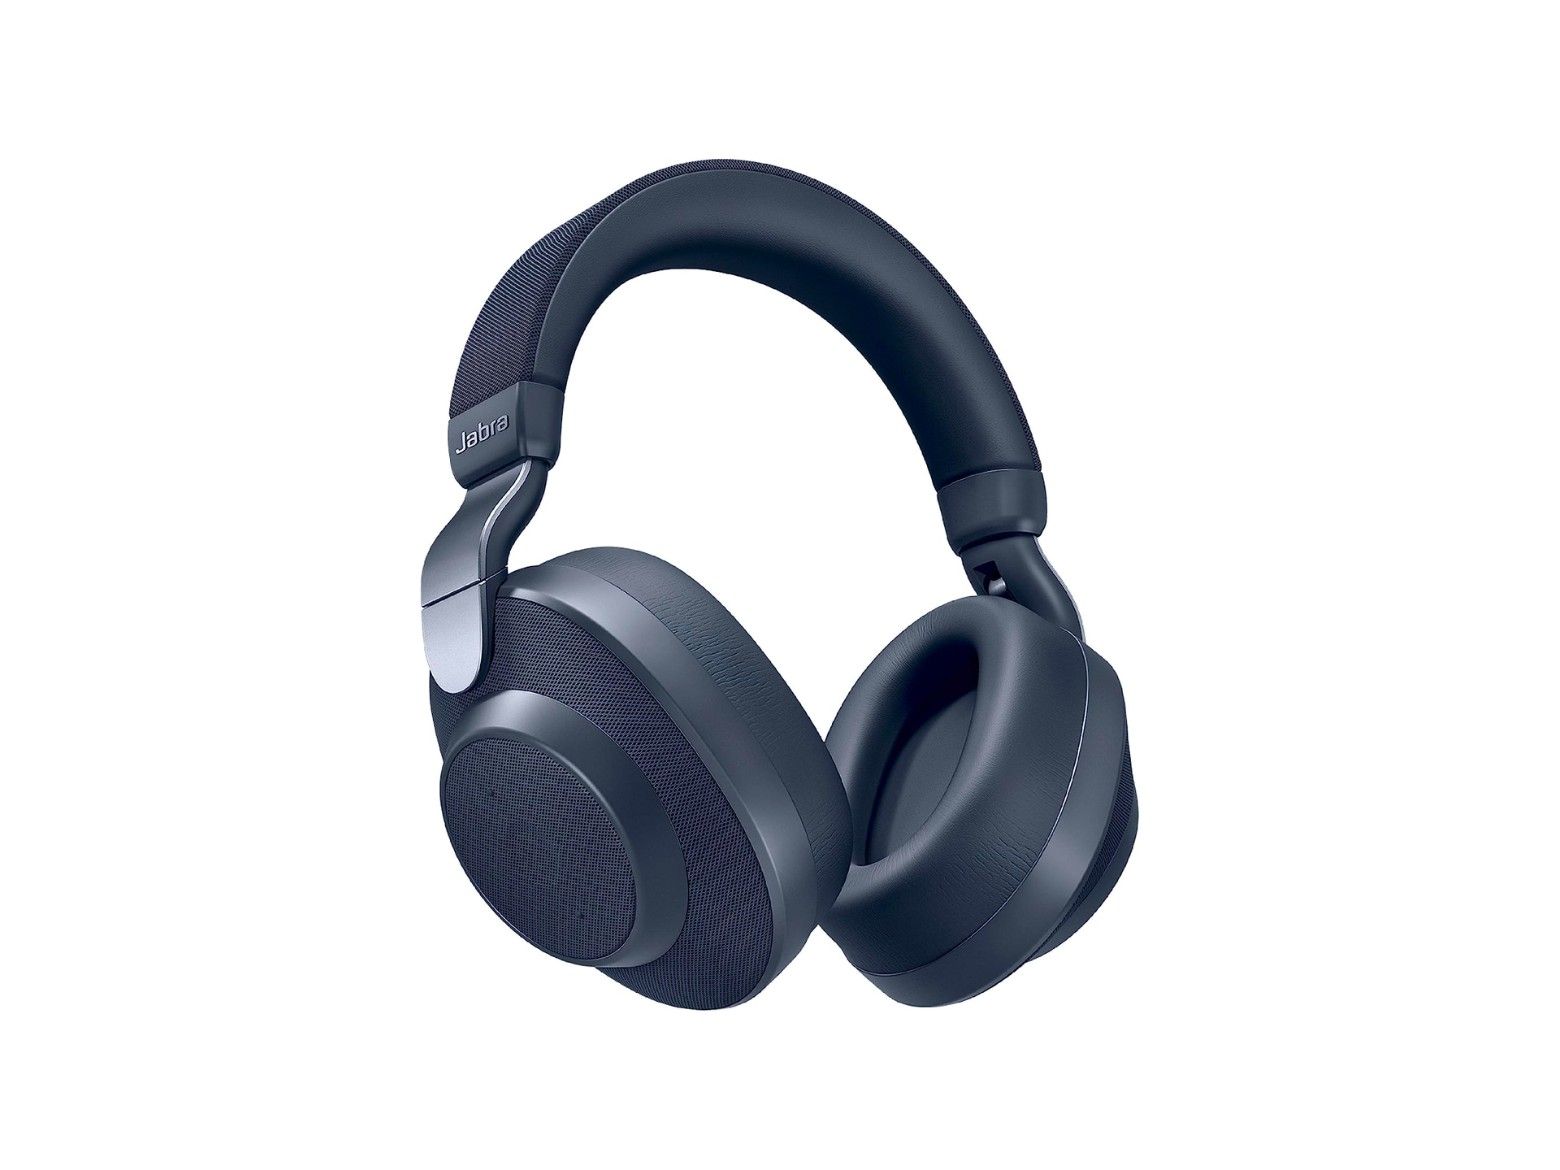 jabra elite 85h Sony headphones for remote work